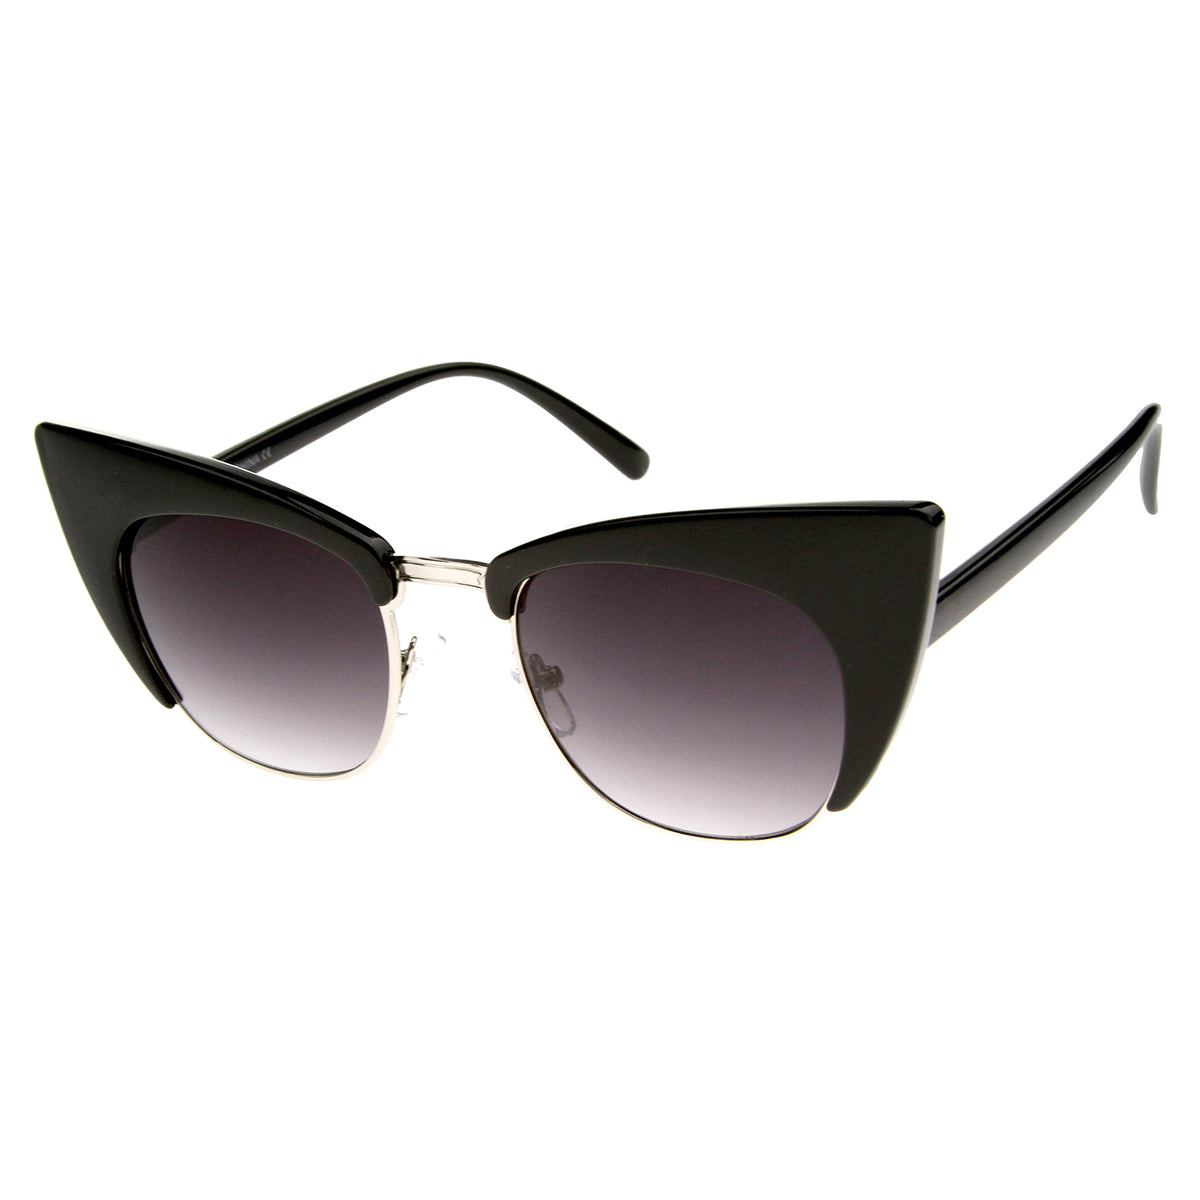 Women's High Fashion Half Frame Bold Square Cat Eye Sunglasses 50mm ...